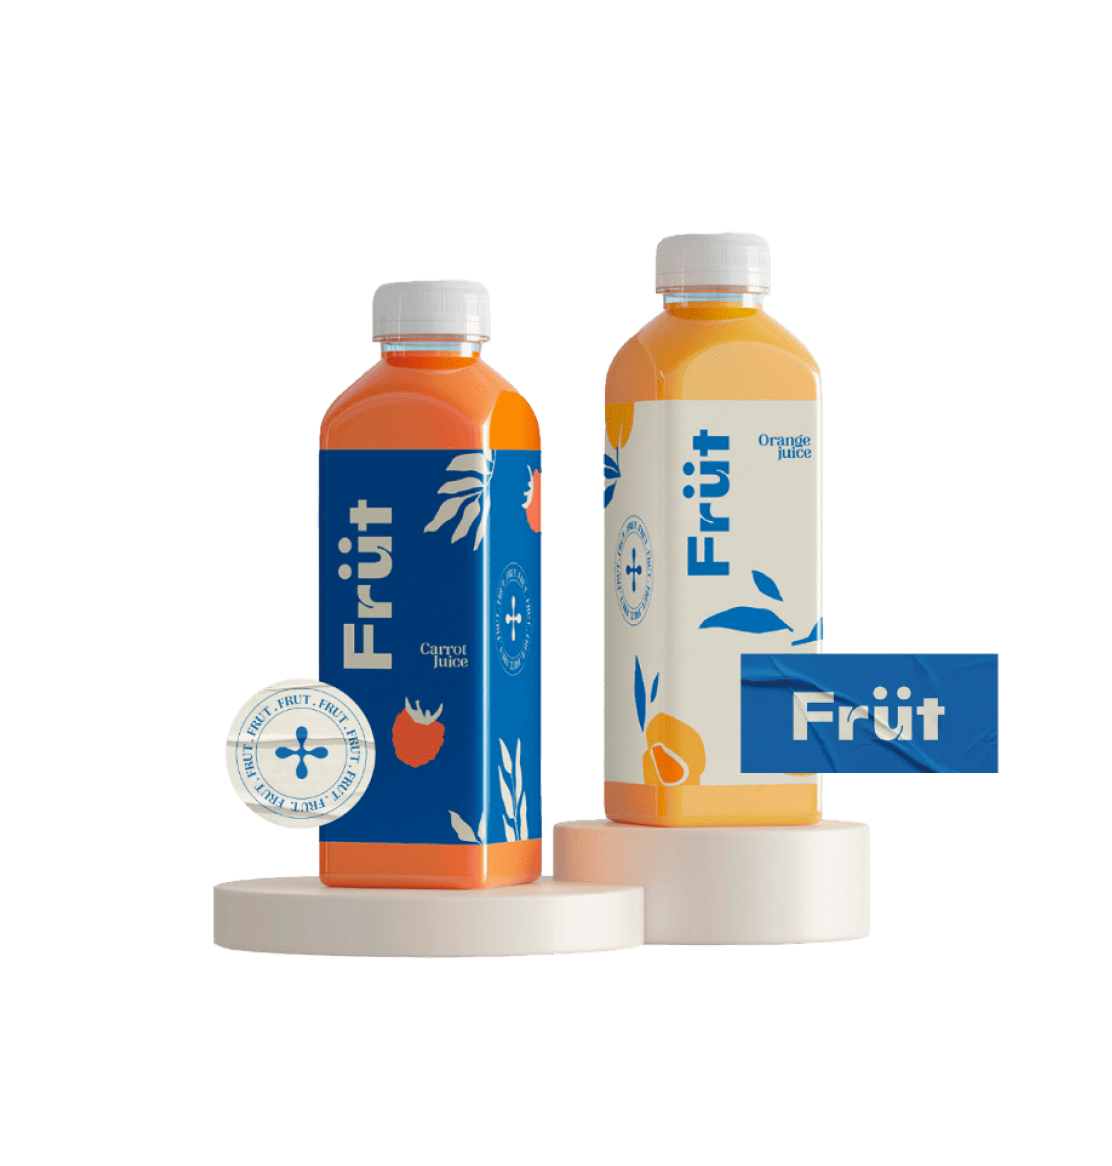 Frut branding mockup